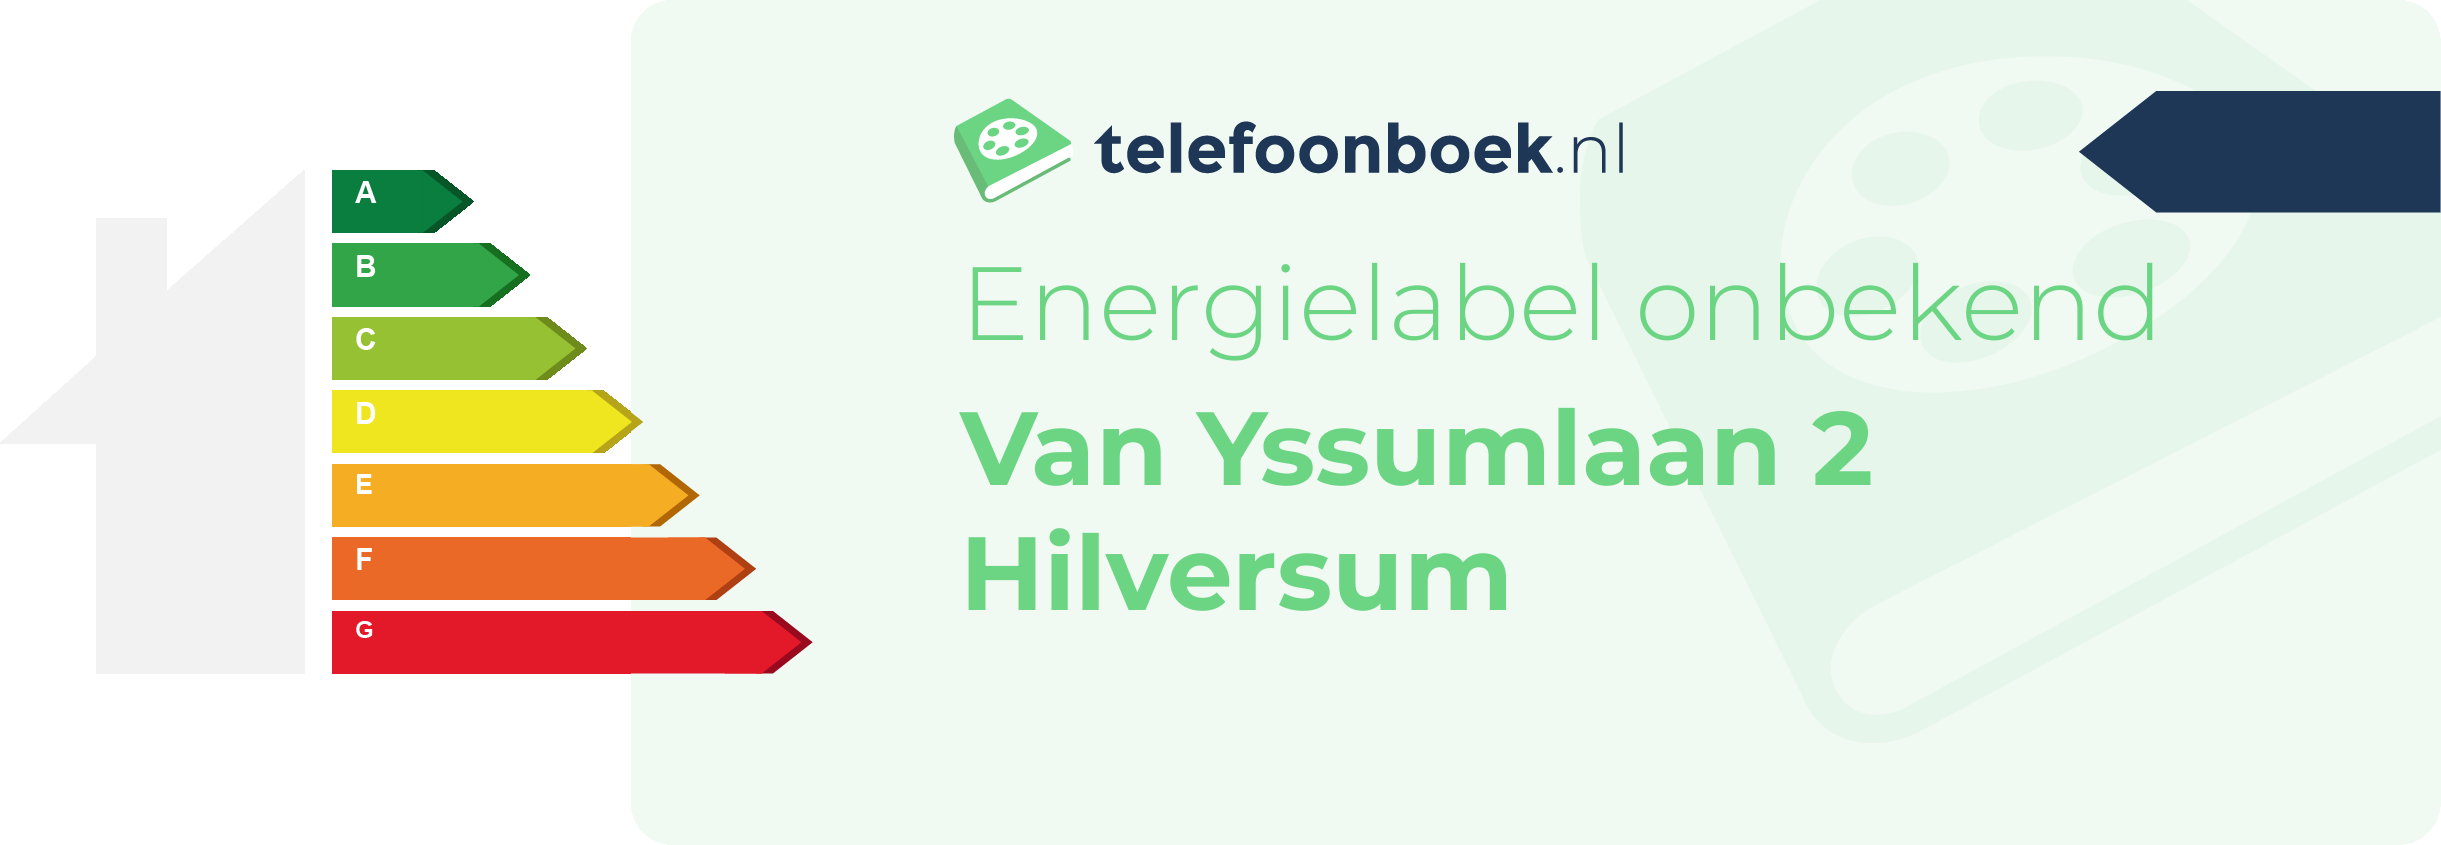 Energielabel Van Yssumlaan 2 Hilversum